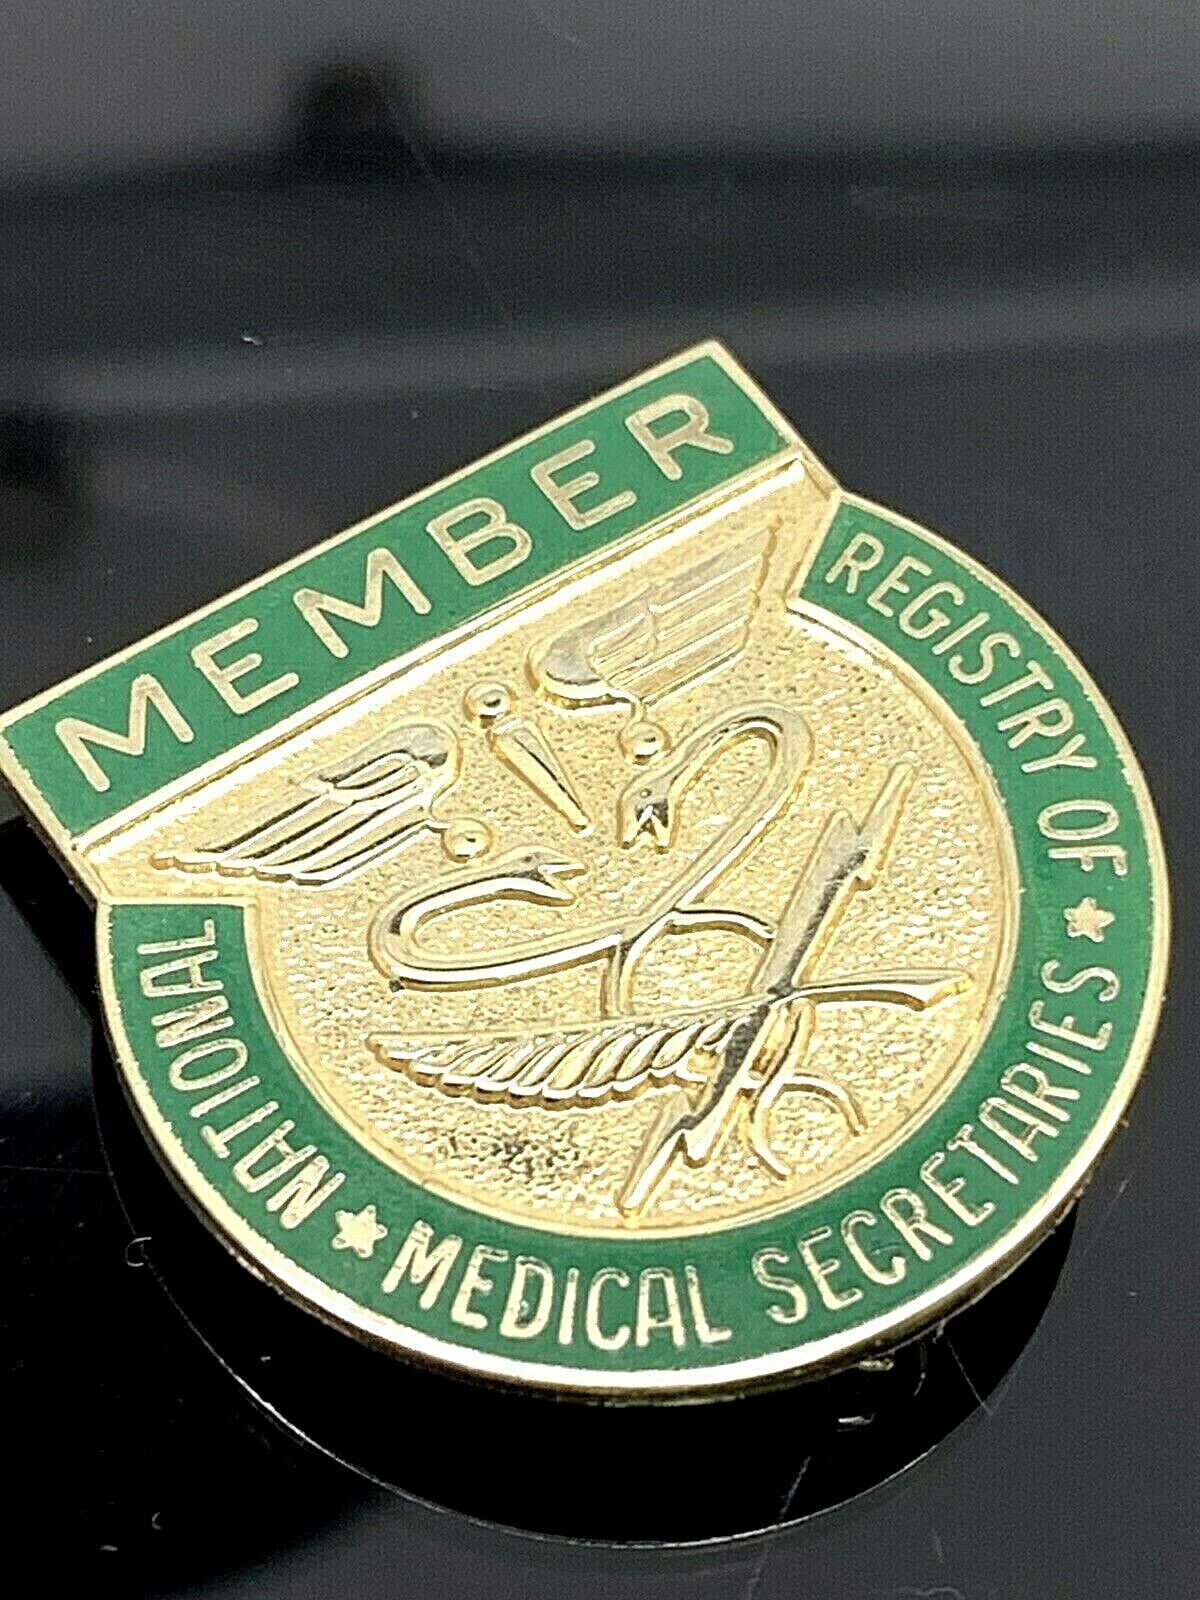 National Registry of Medical Secretaries Member Pin Vintage 14k Yellow Gold 5.7g